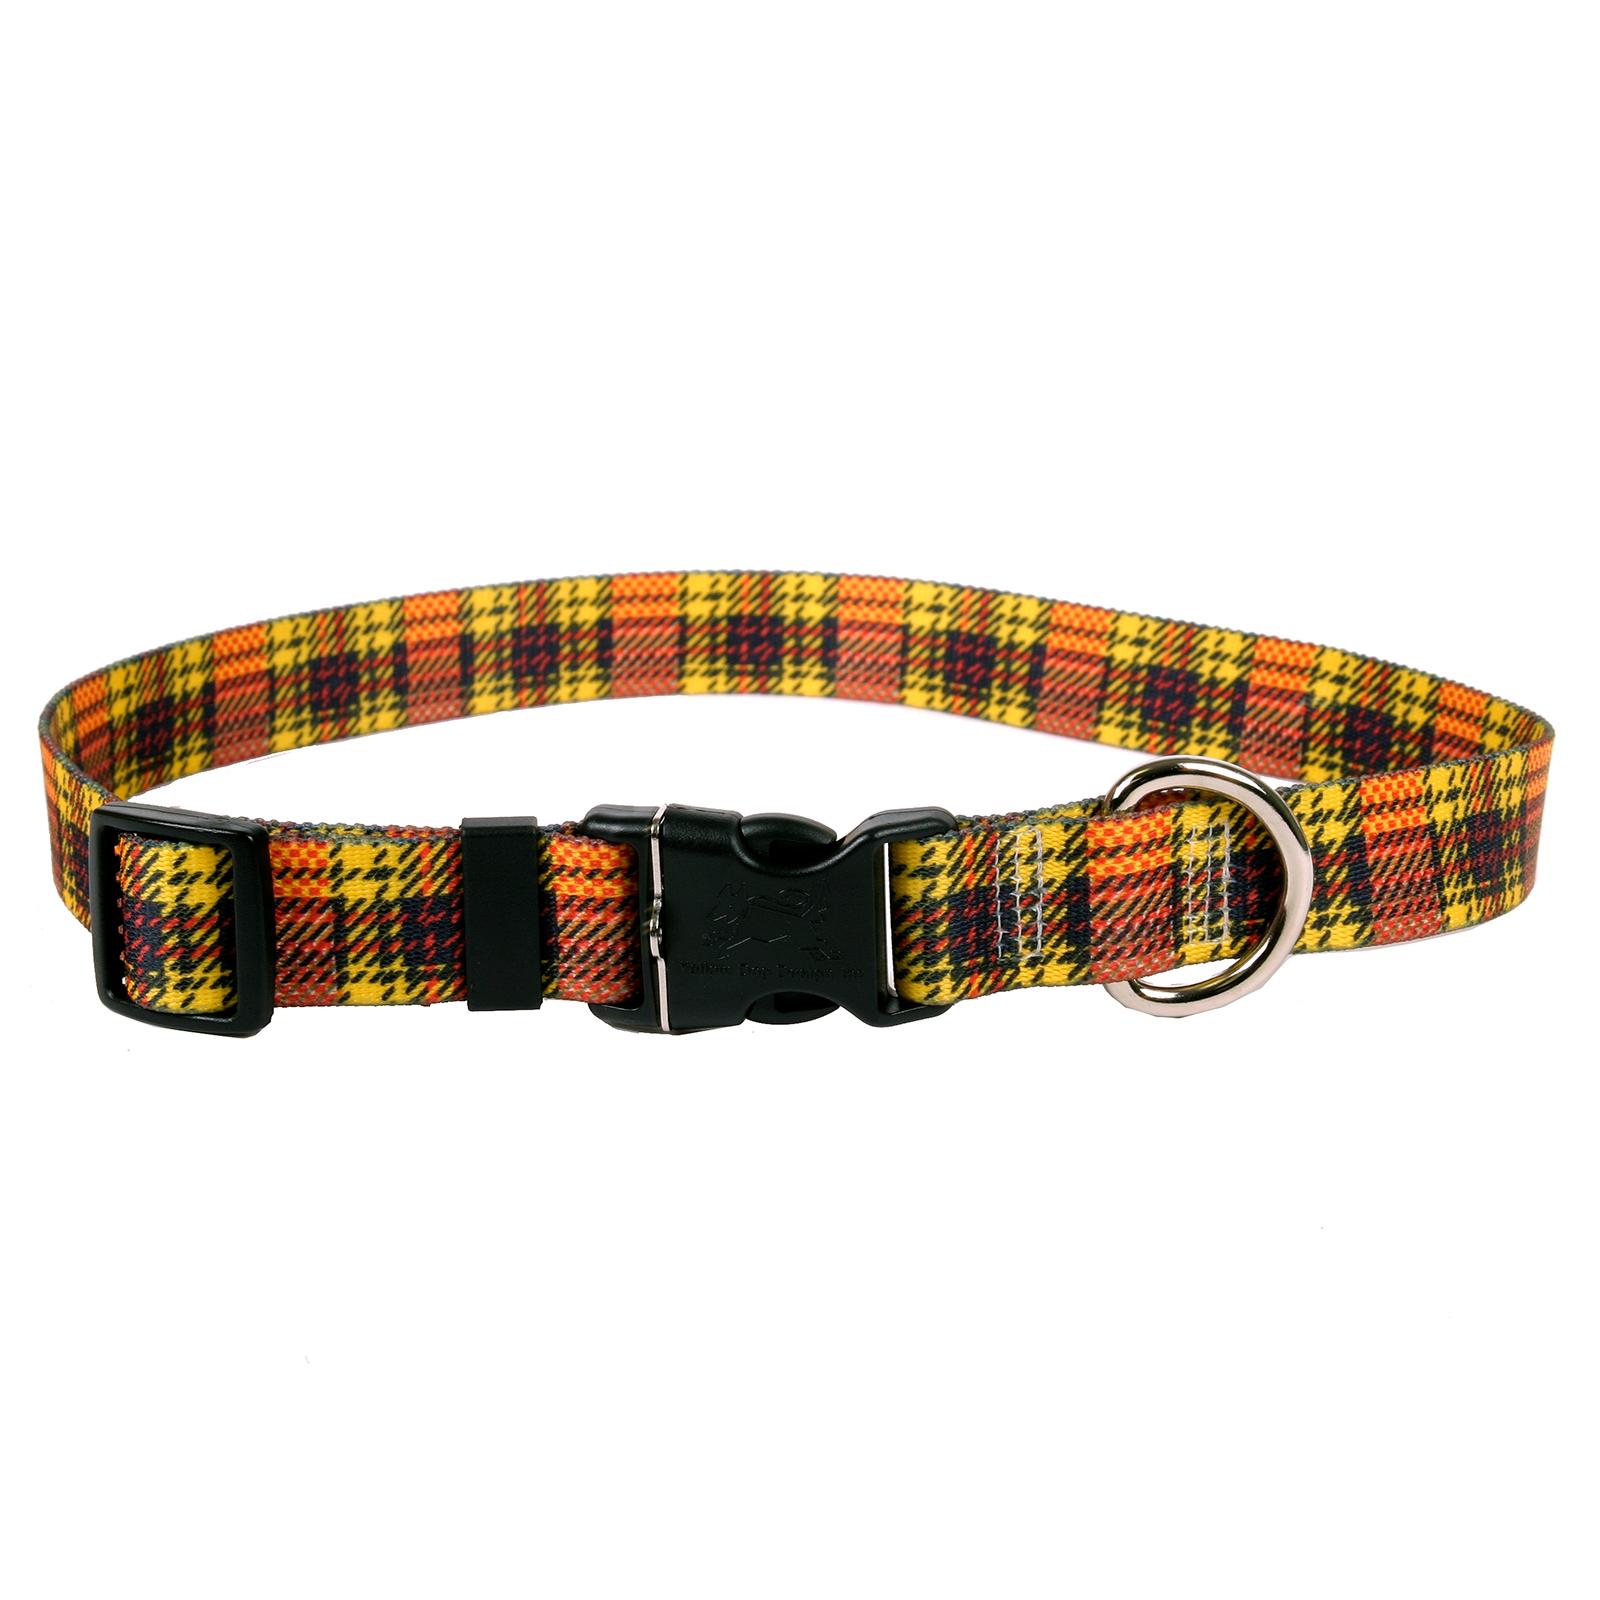 Highland Plaid Dog Collar by Yellow Dog - Yellow